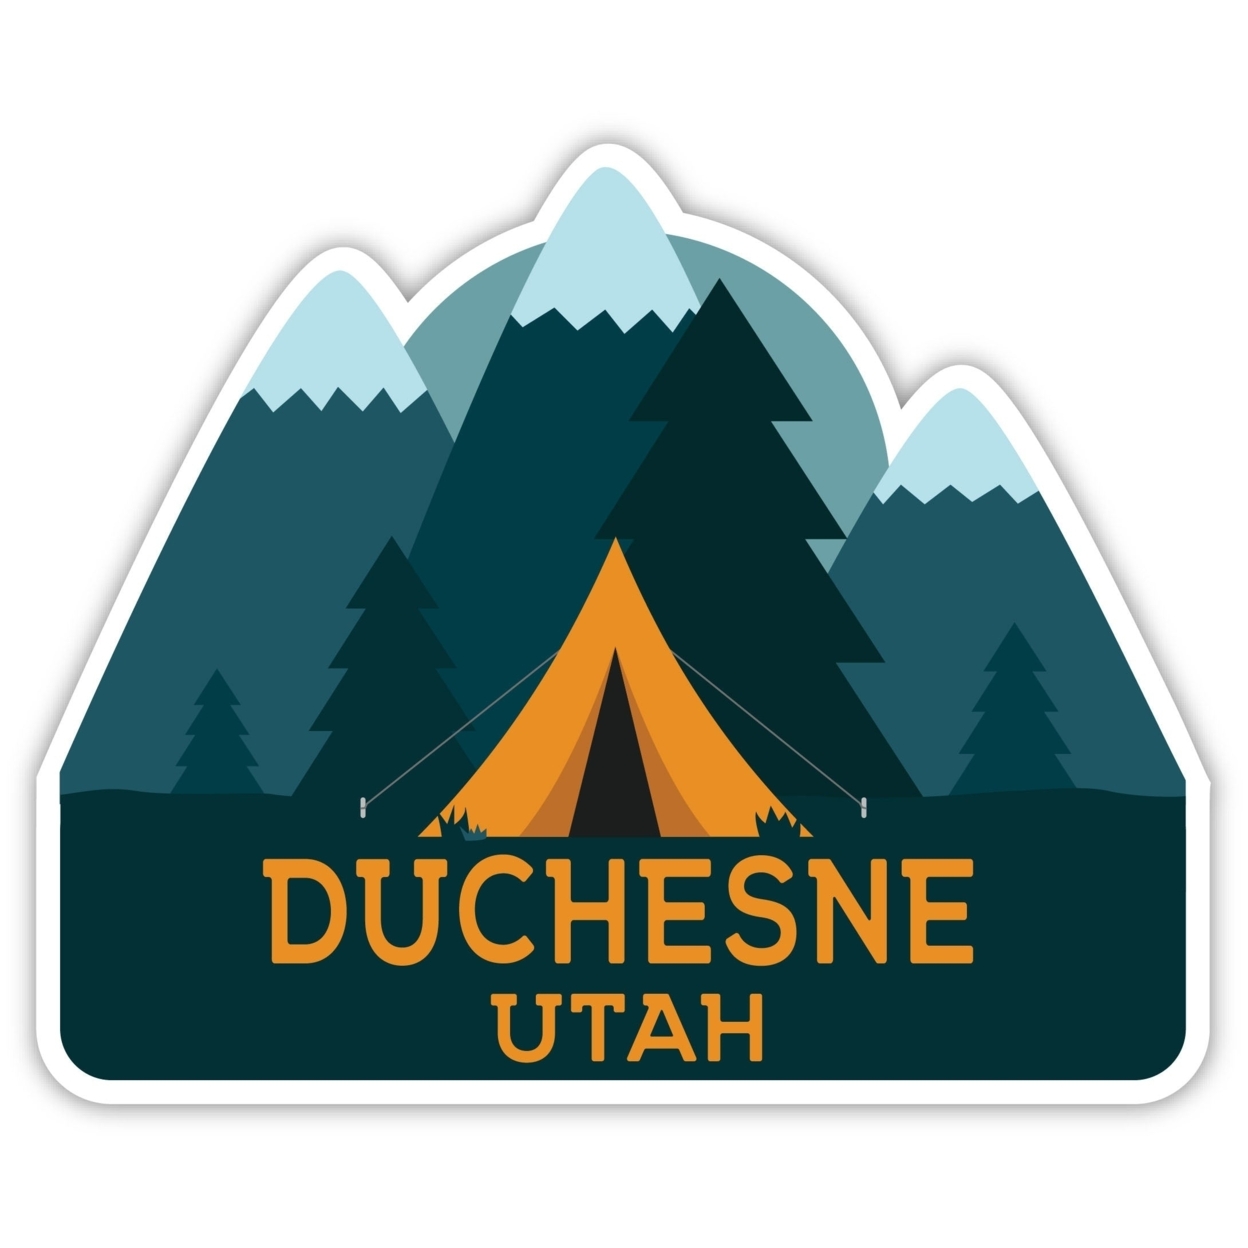 Duchesne Utah Souvenir Decorative Stickers (Choose Theme And Size) - 4-Pack, 2-Inch, Tent